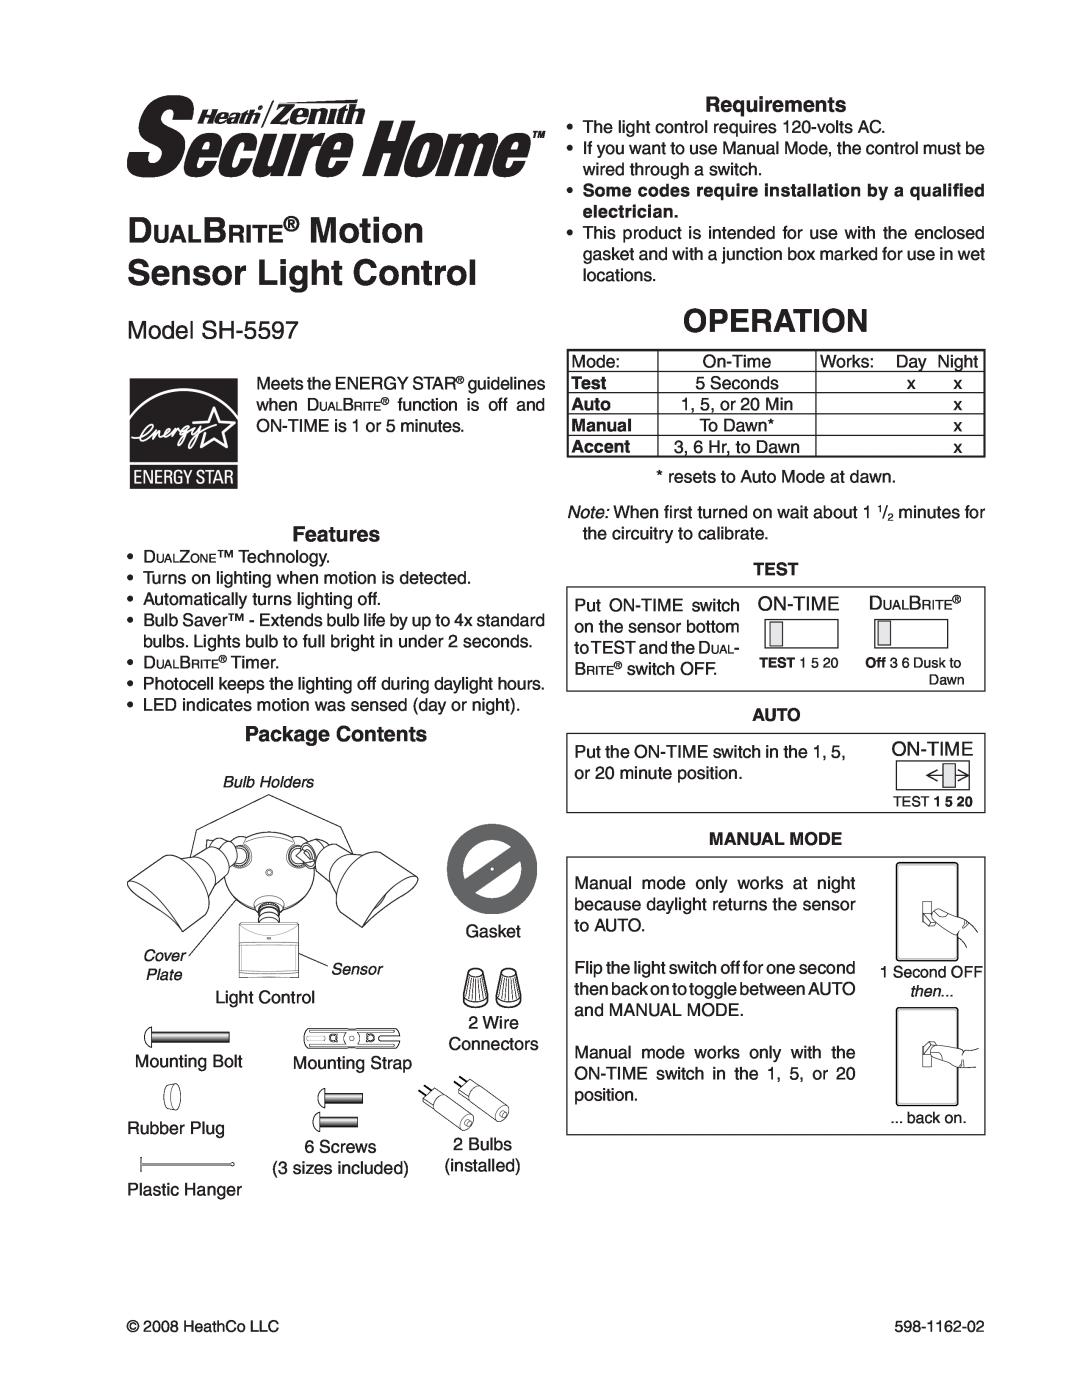 Heath Zenith manual DualBrite Motion Sensor Light Control, Operation, Model SH-5597, On-Time, Test, Auto, Manual 